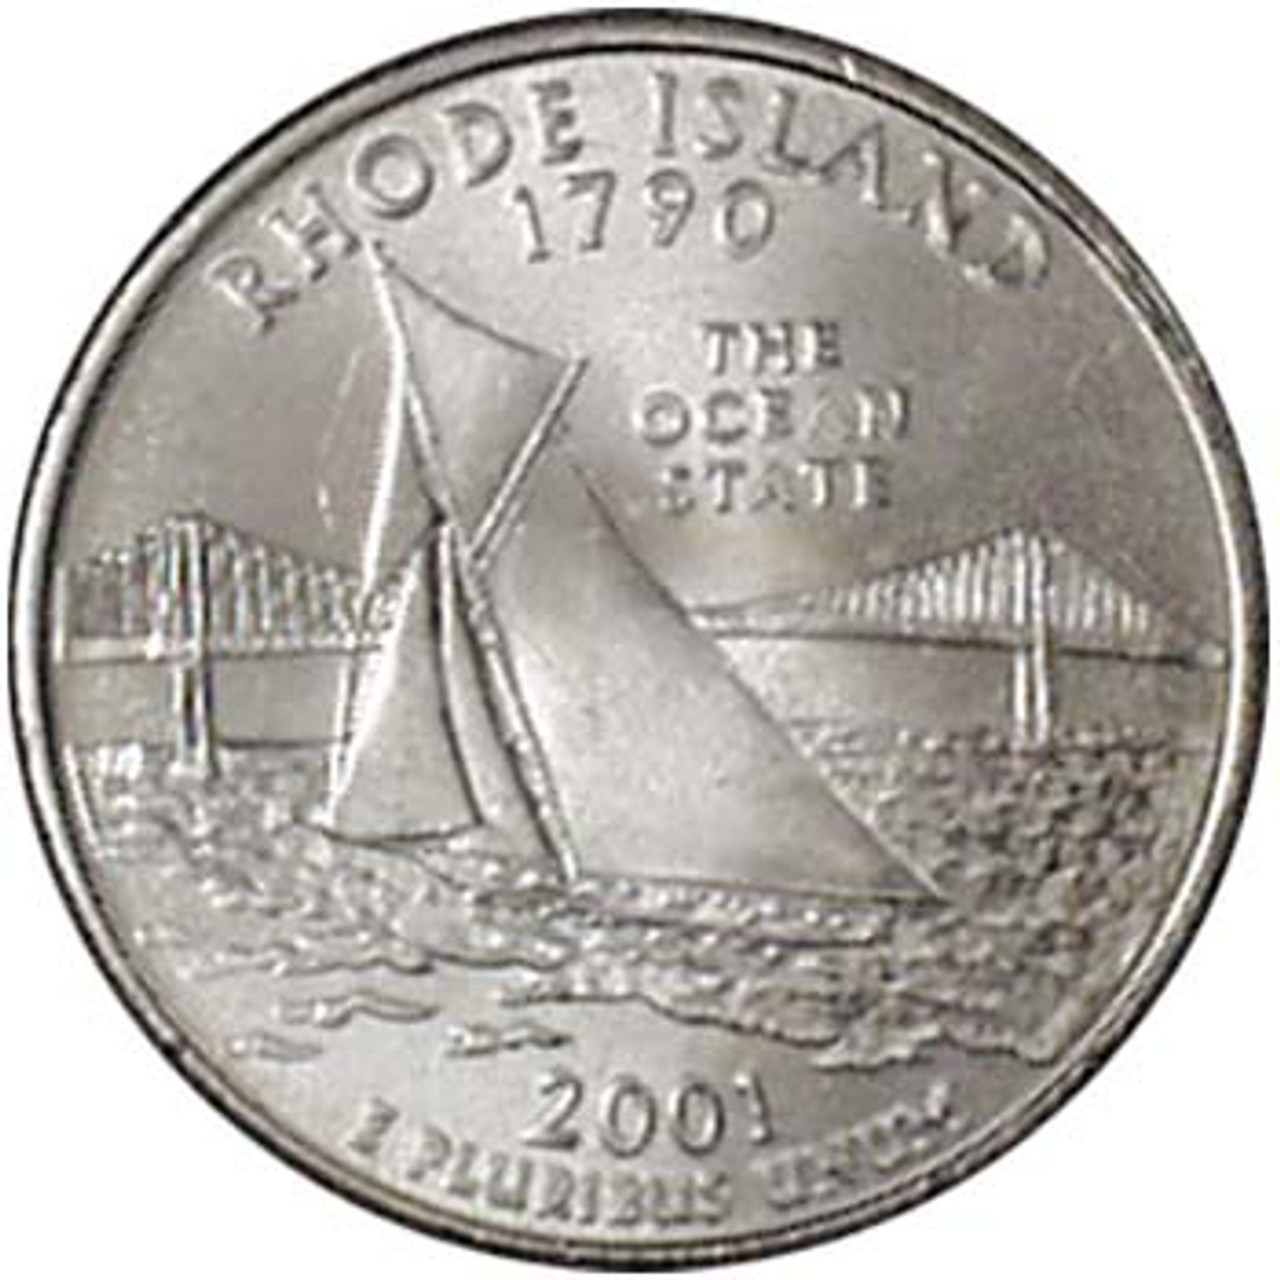 2001-D Rhode Island Quarter Brilliant Uncirculated Image 1